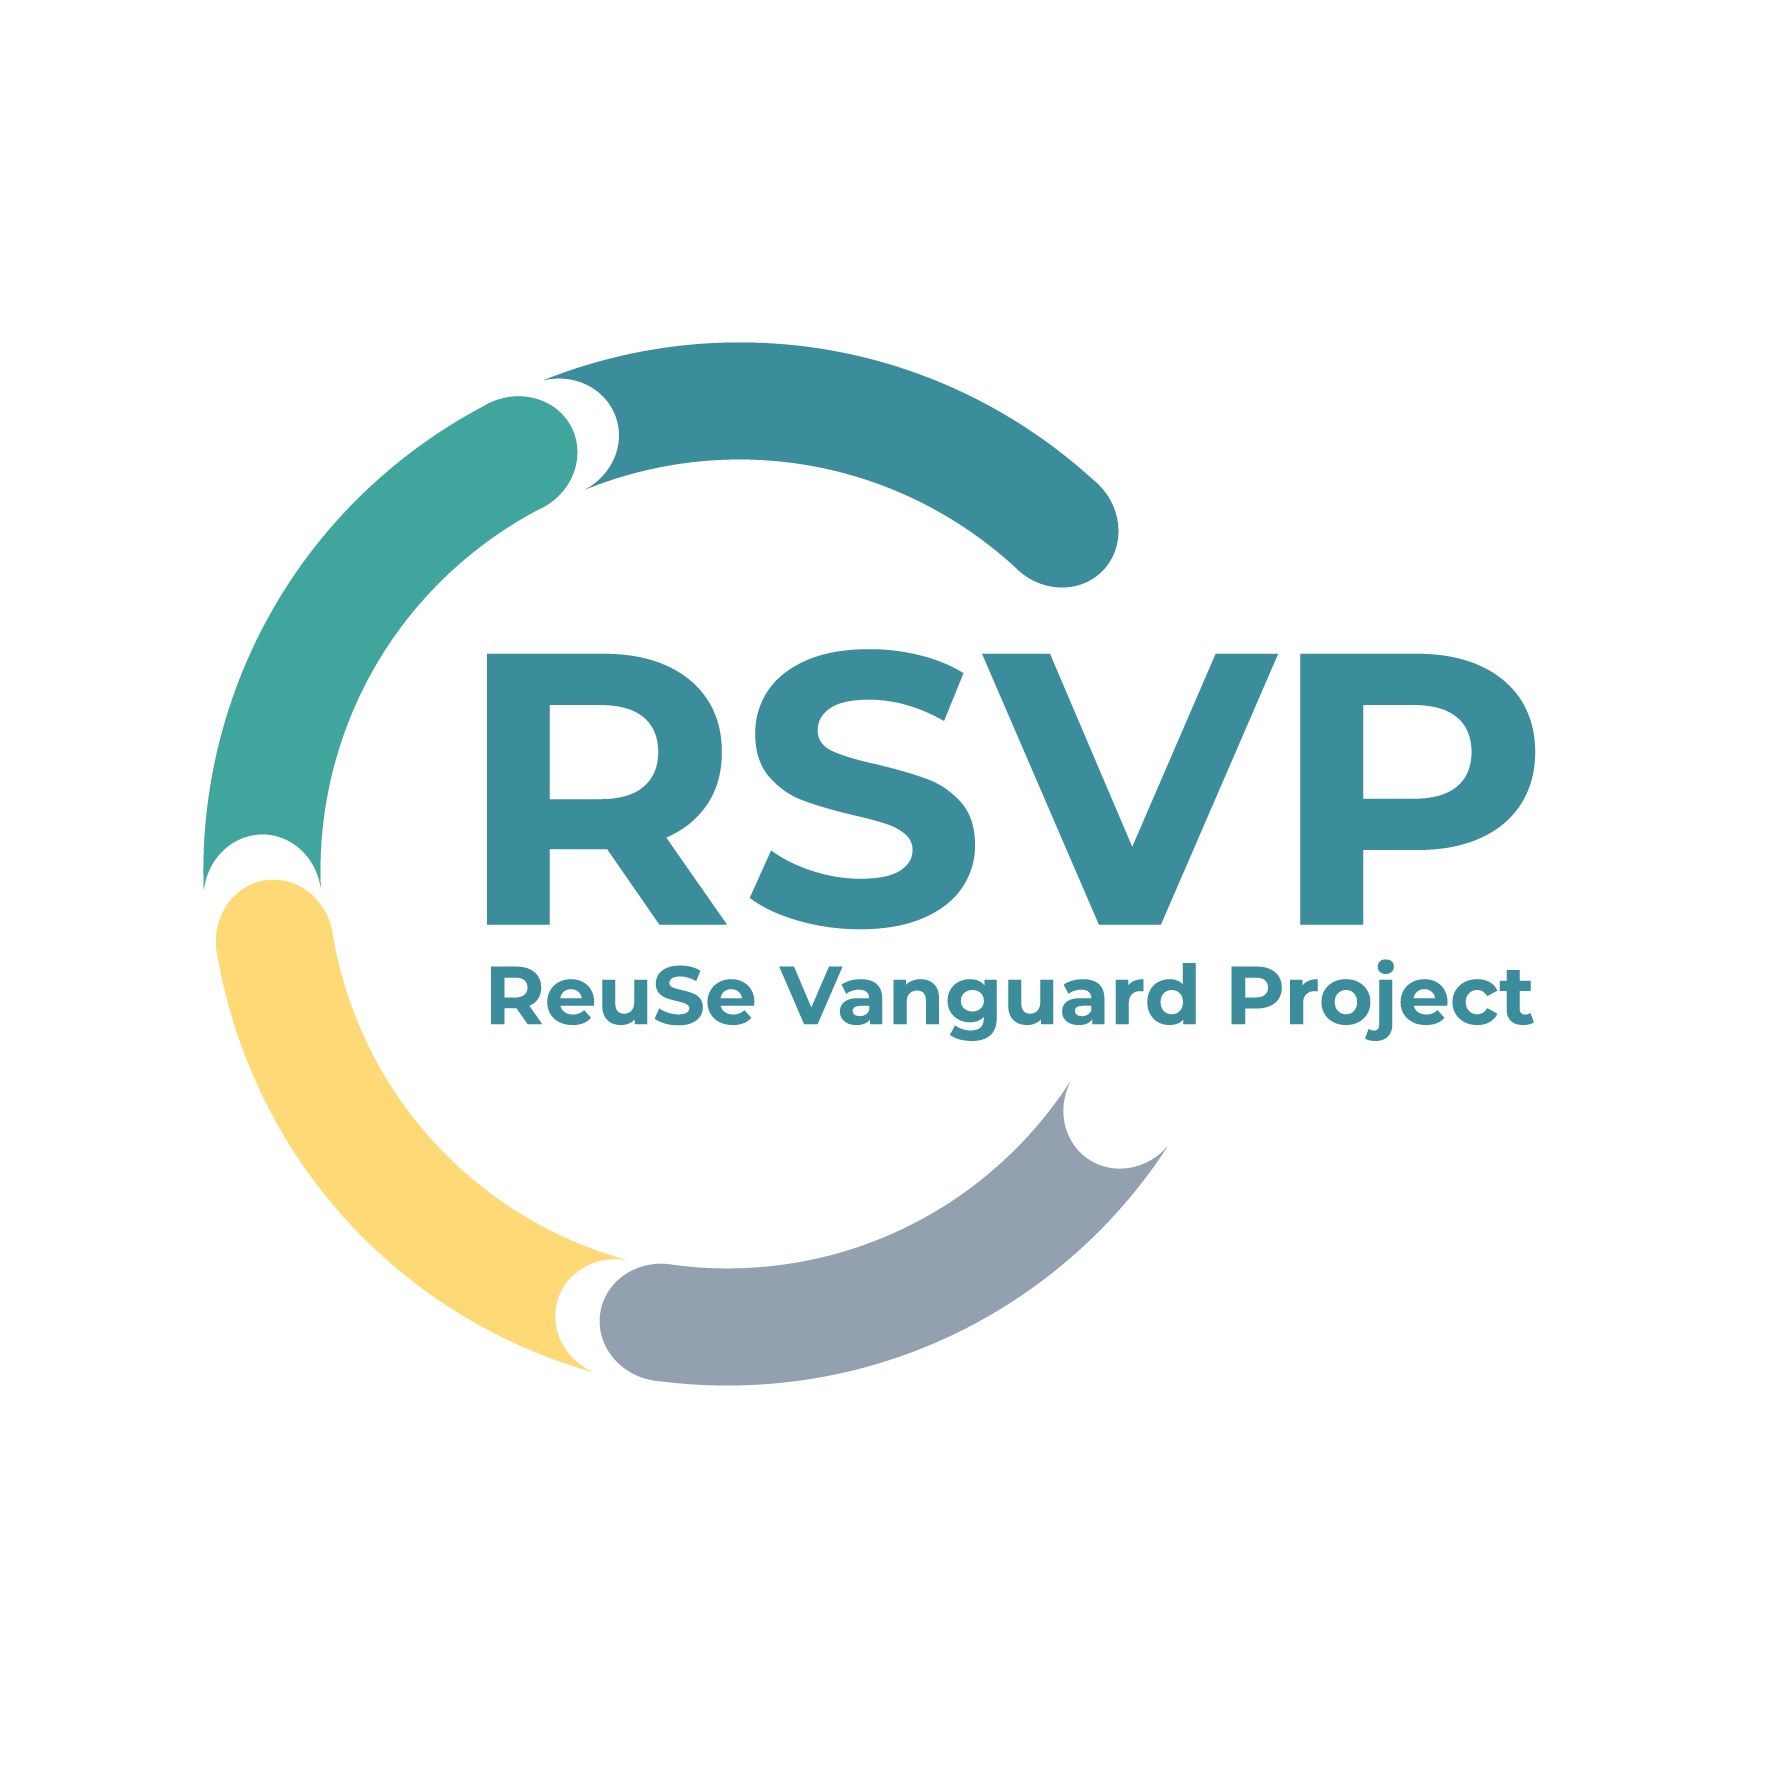 ReuSe Vanguard Project